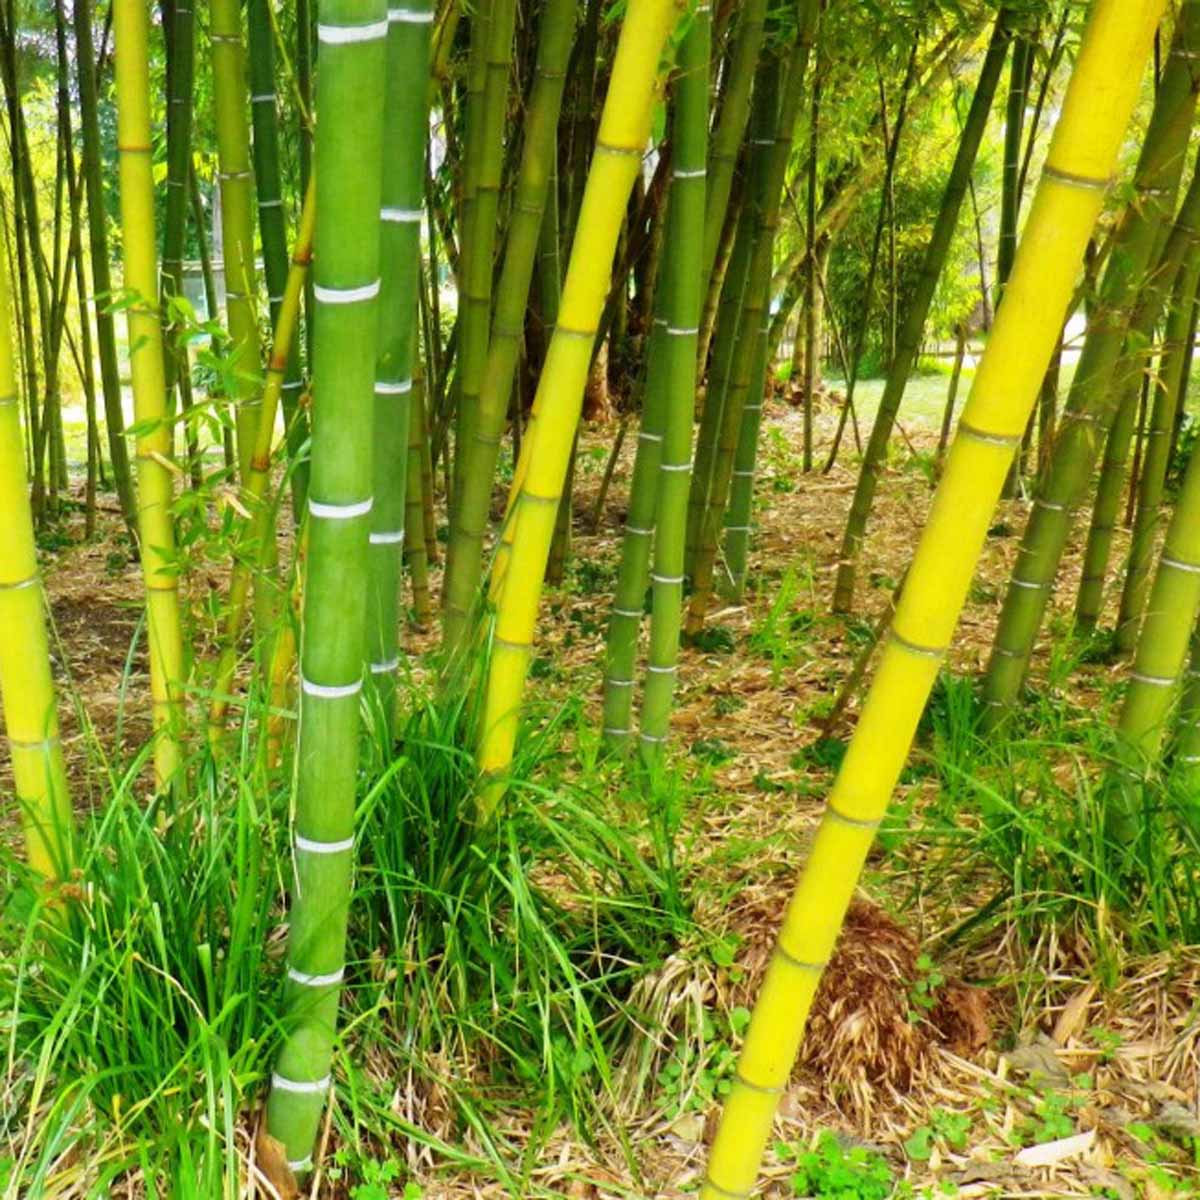 Bambù, graminacee tropicali